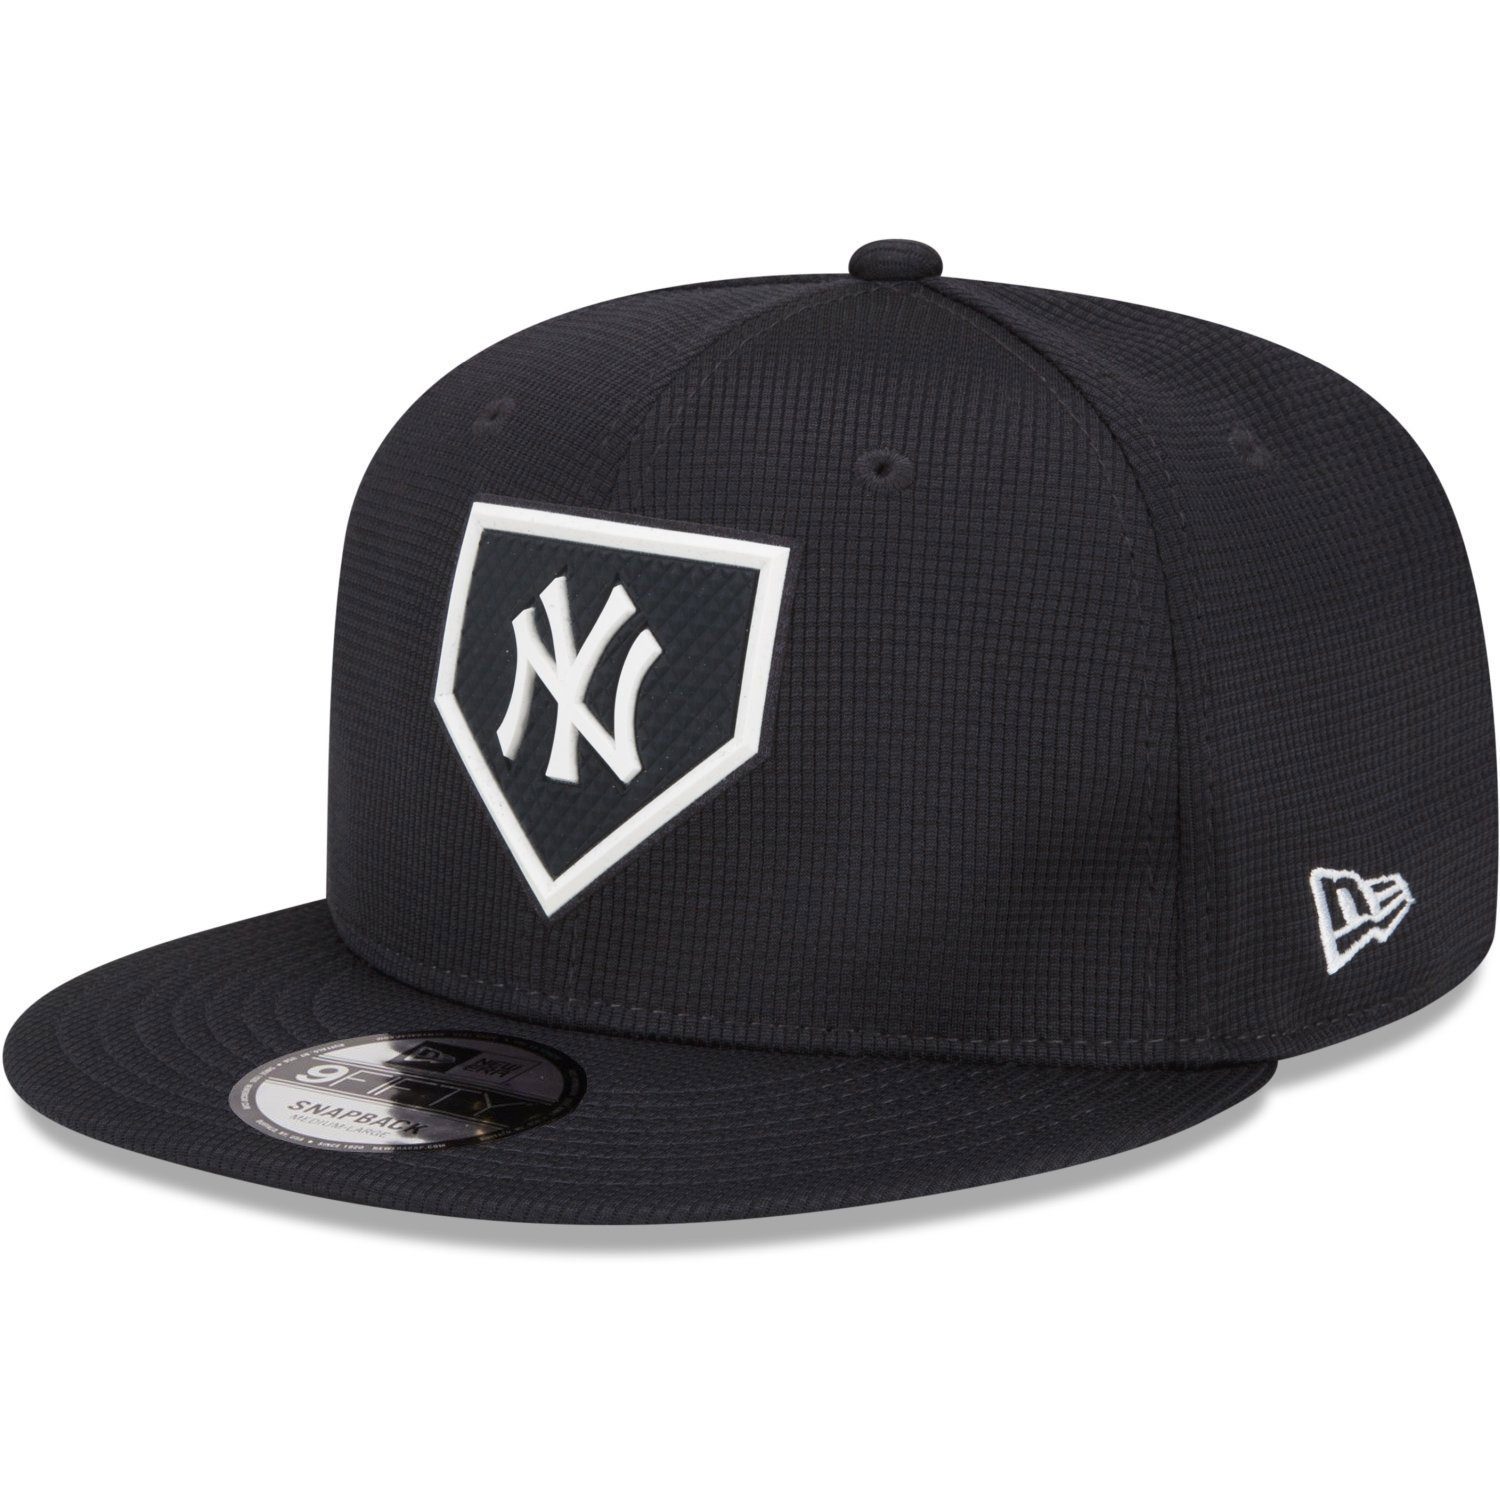 CLUBHOUSE York New 9FIFTY Cap Era Yankees Snapback New